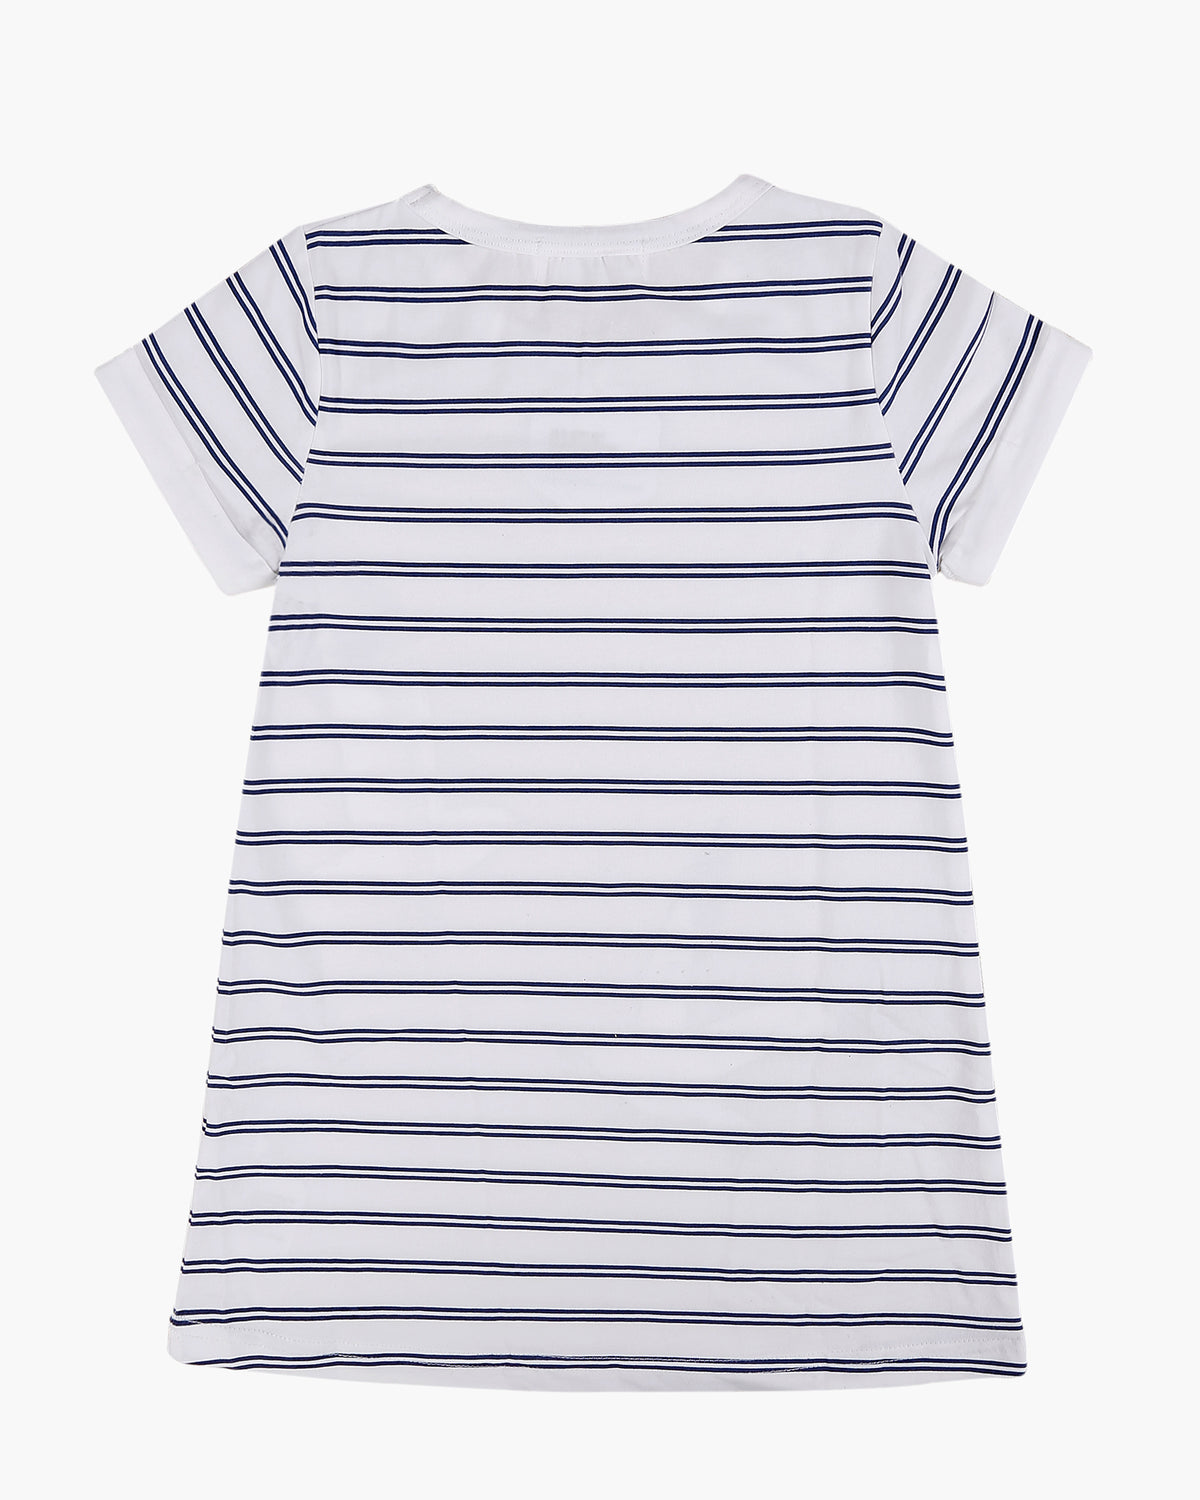 T-Shirt Dress in Seagulls &amp; Stripes Print Navy Back